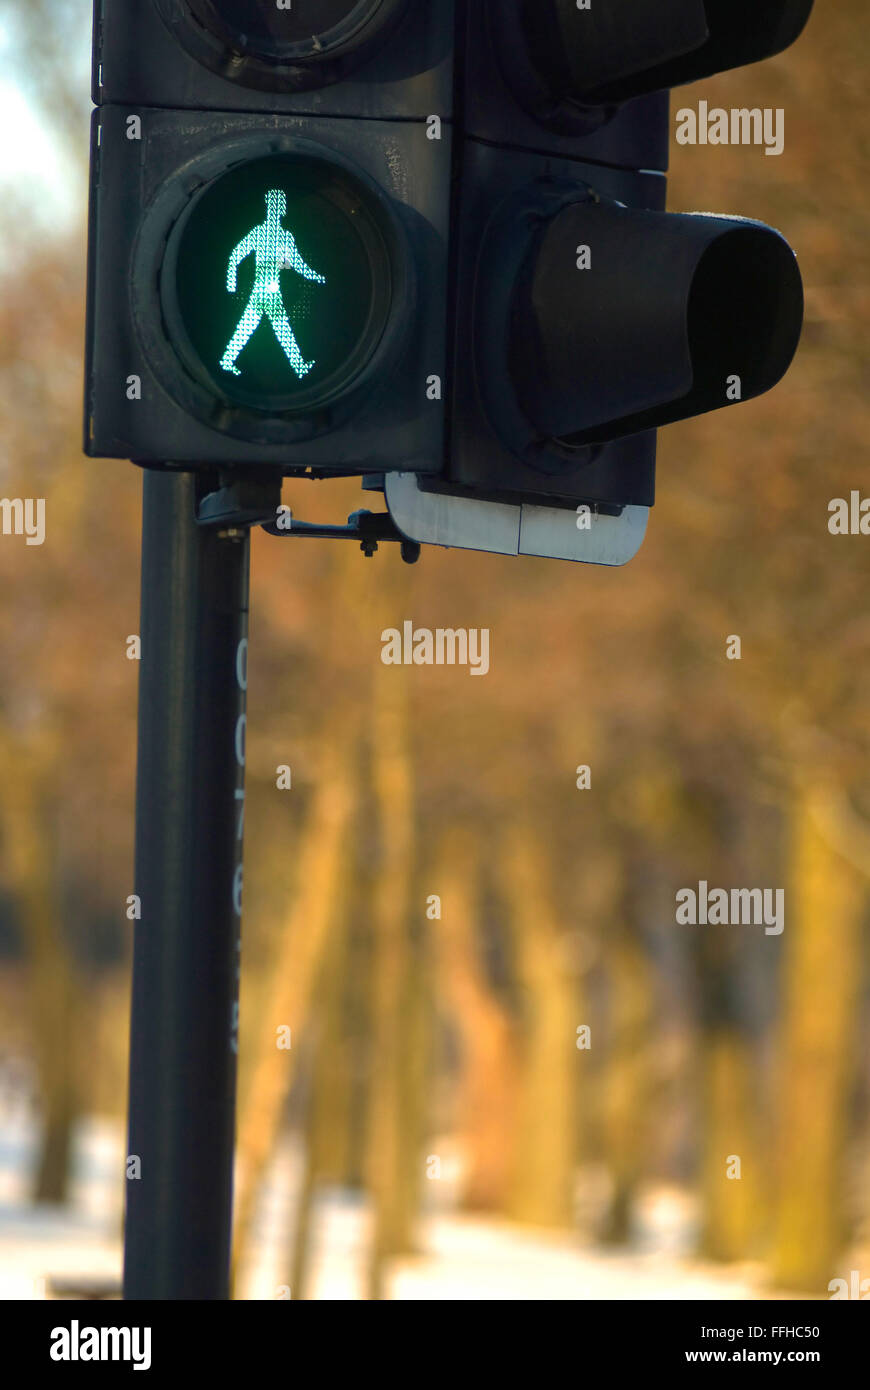 green man / traffic signal Stock Photo